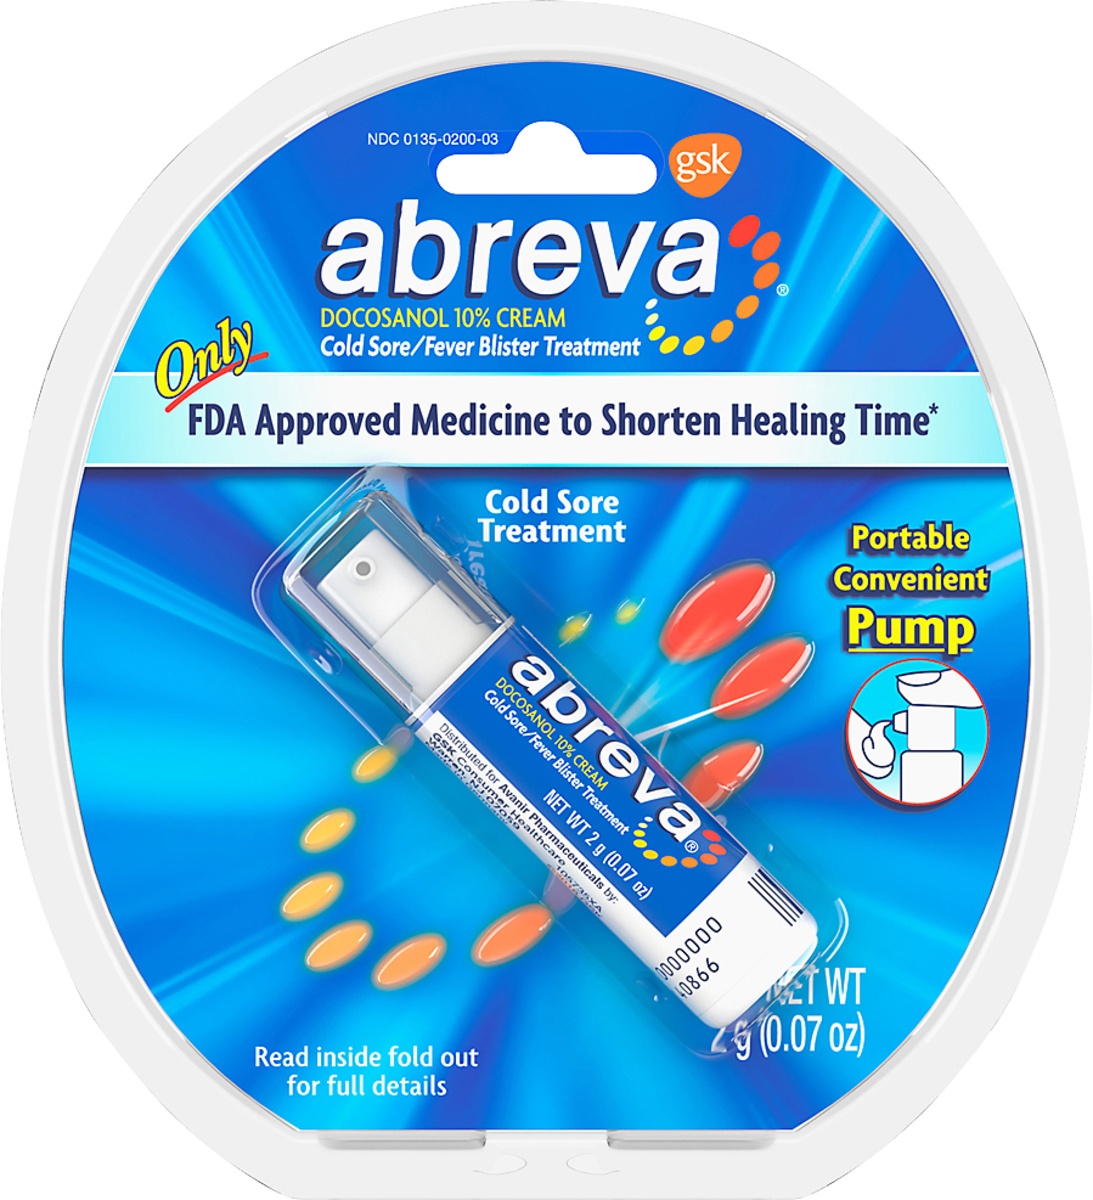 slide 5 of 7, Abreva 10% Docosanol Cold Sore Treatment, Treats Your Fever Blister in 2.5 Days - 0.07 oz Pump, 0.07 oz